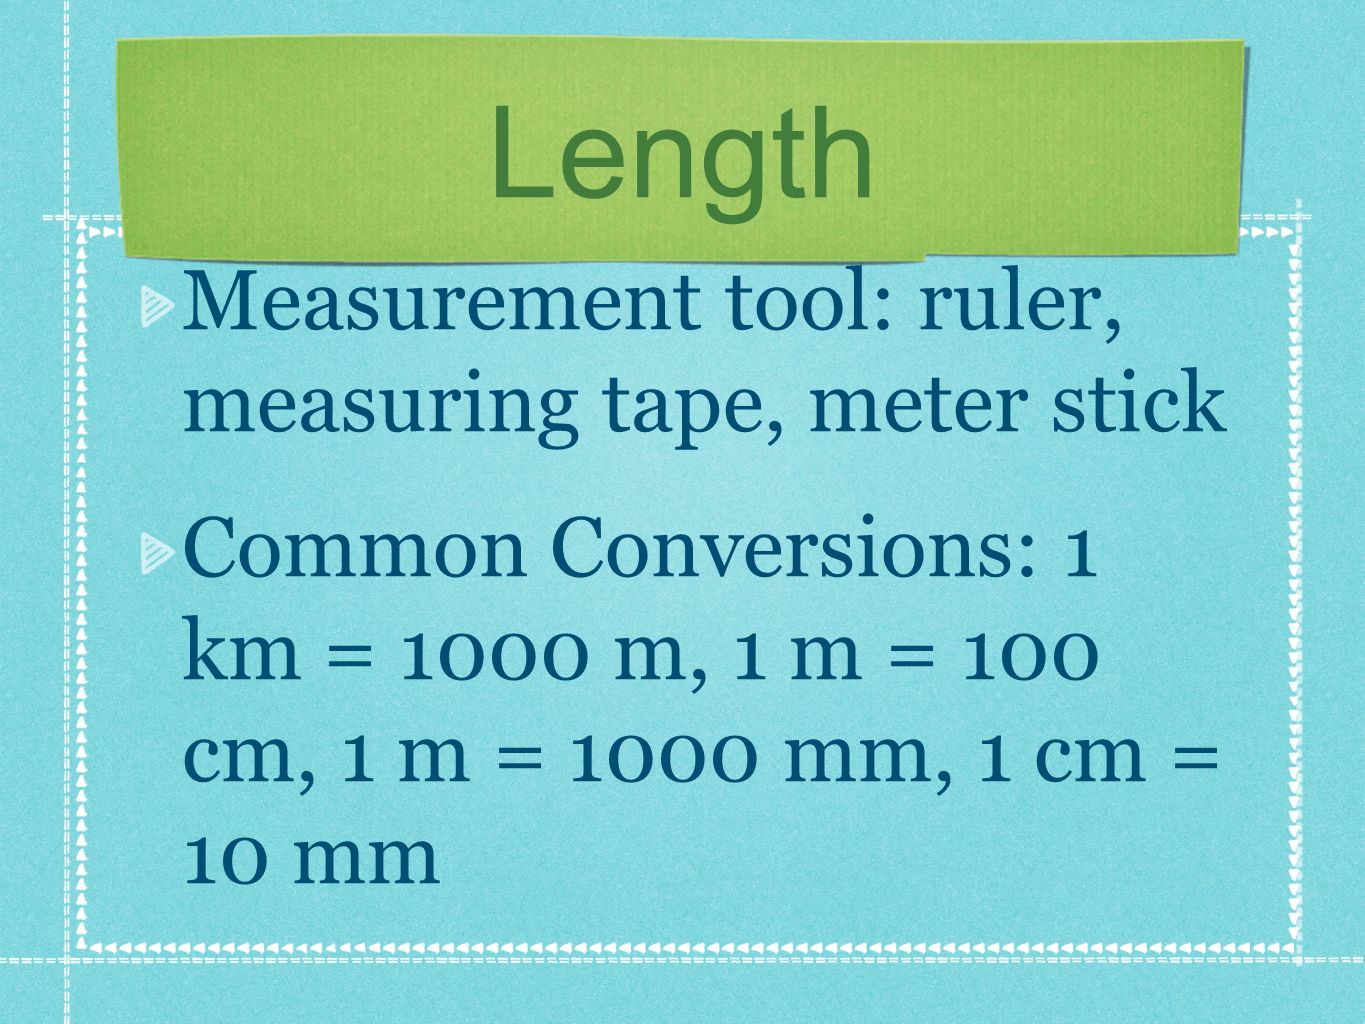 Length Measurement tool: ruler, measuring tape, meter stick Common Conversions: 1 km = 1000 m, 1 m = 100 cm, 1 m = 1000 mm, 1 cm = 10 mm